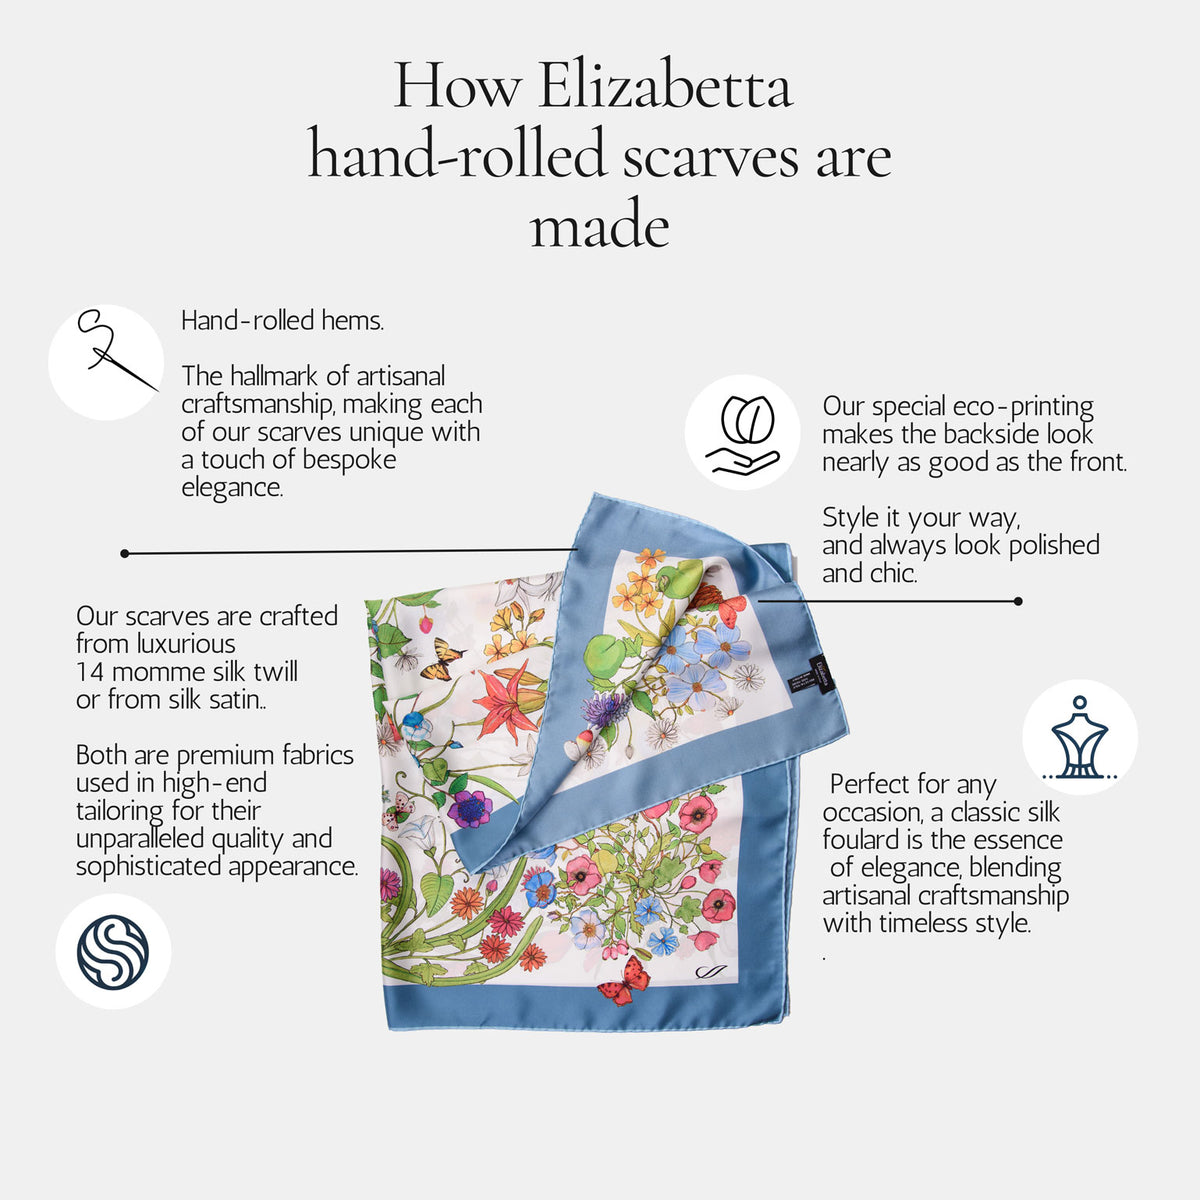 How an Elizabetta classic silk scarf is made